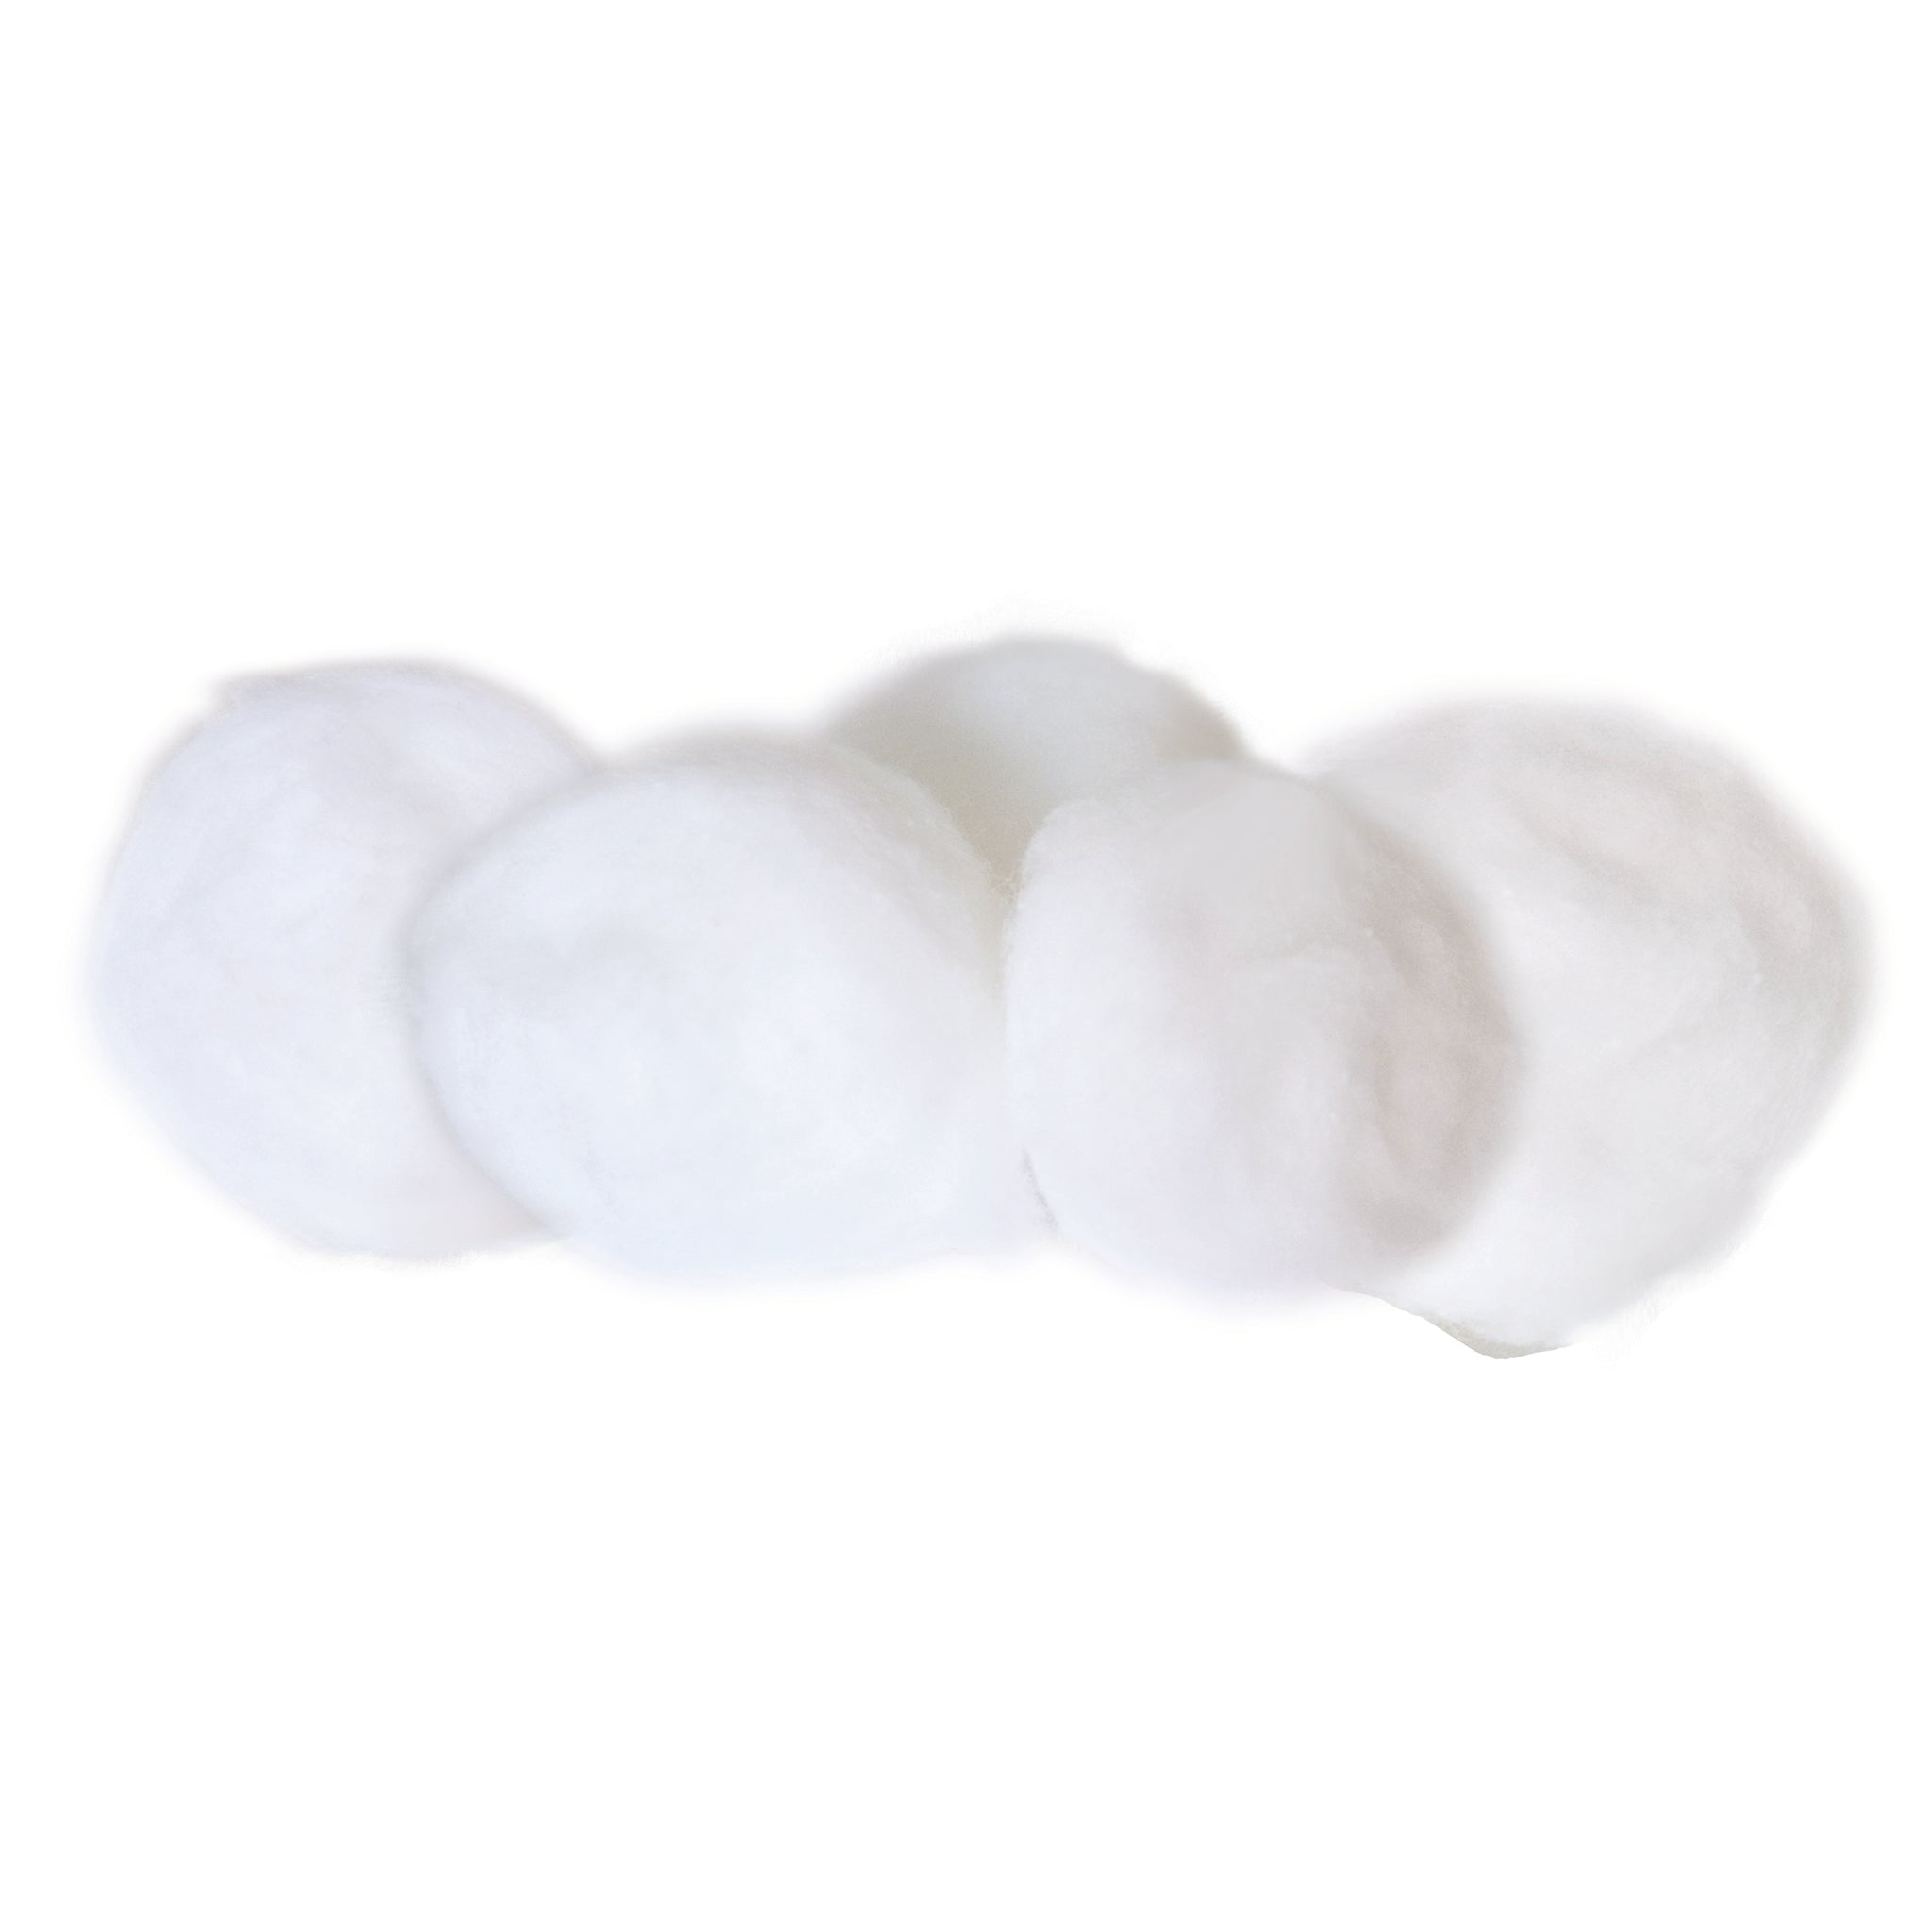 100% Organic Cotton Balls - mypure.co.uk